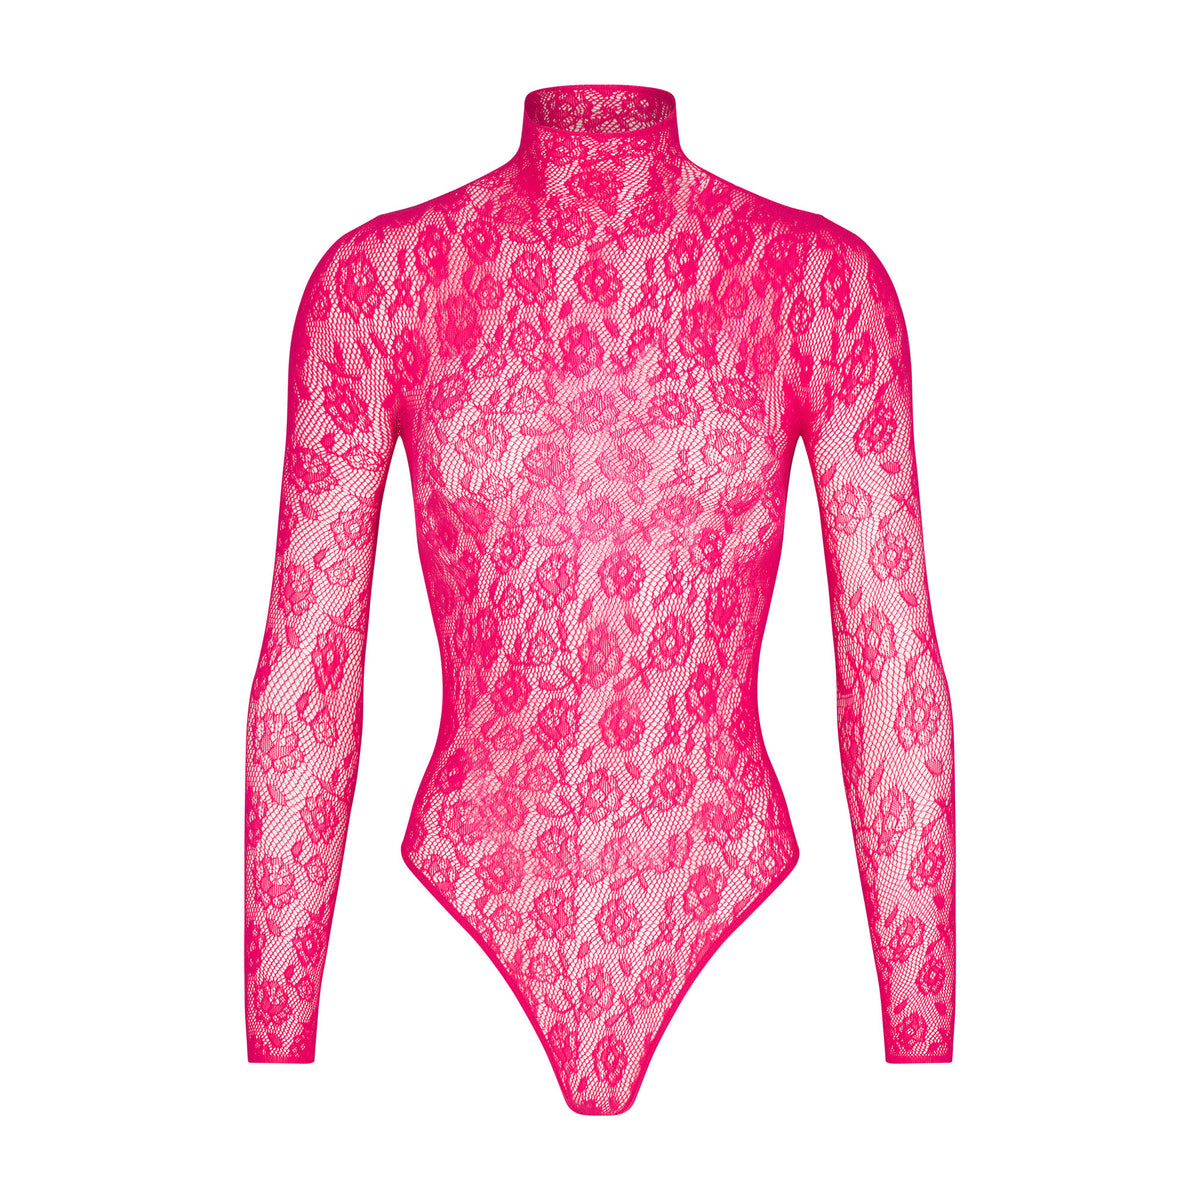 Warp Knit Lace Bodysuit - Punch | SKIMS